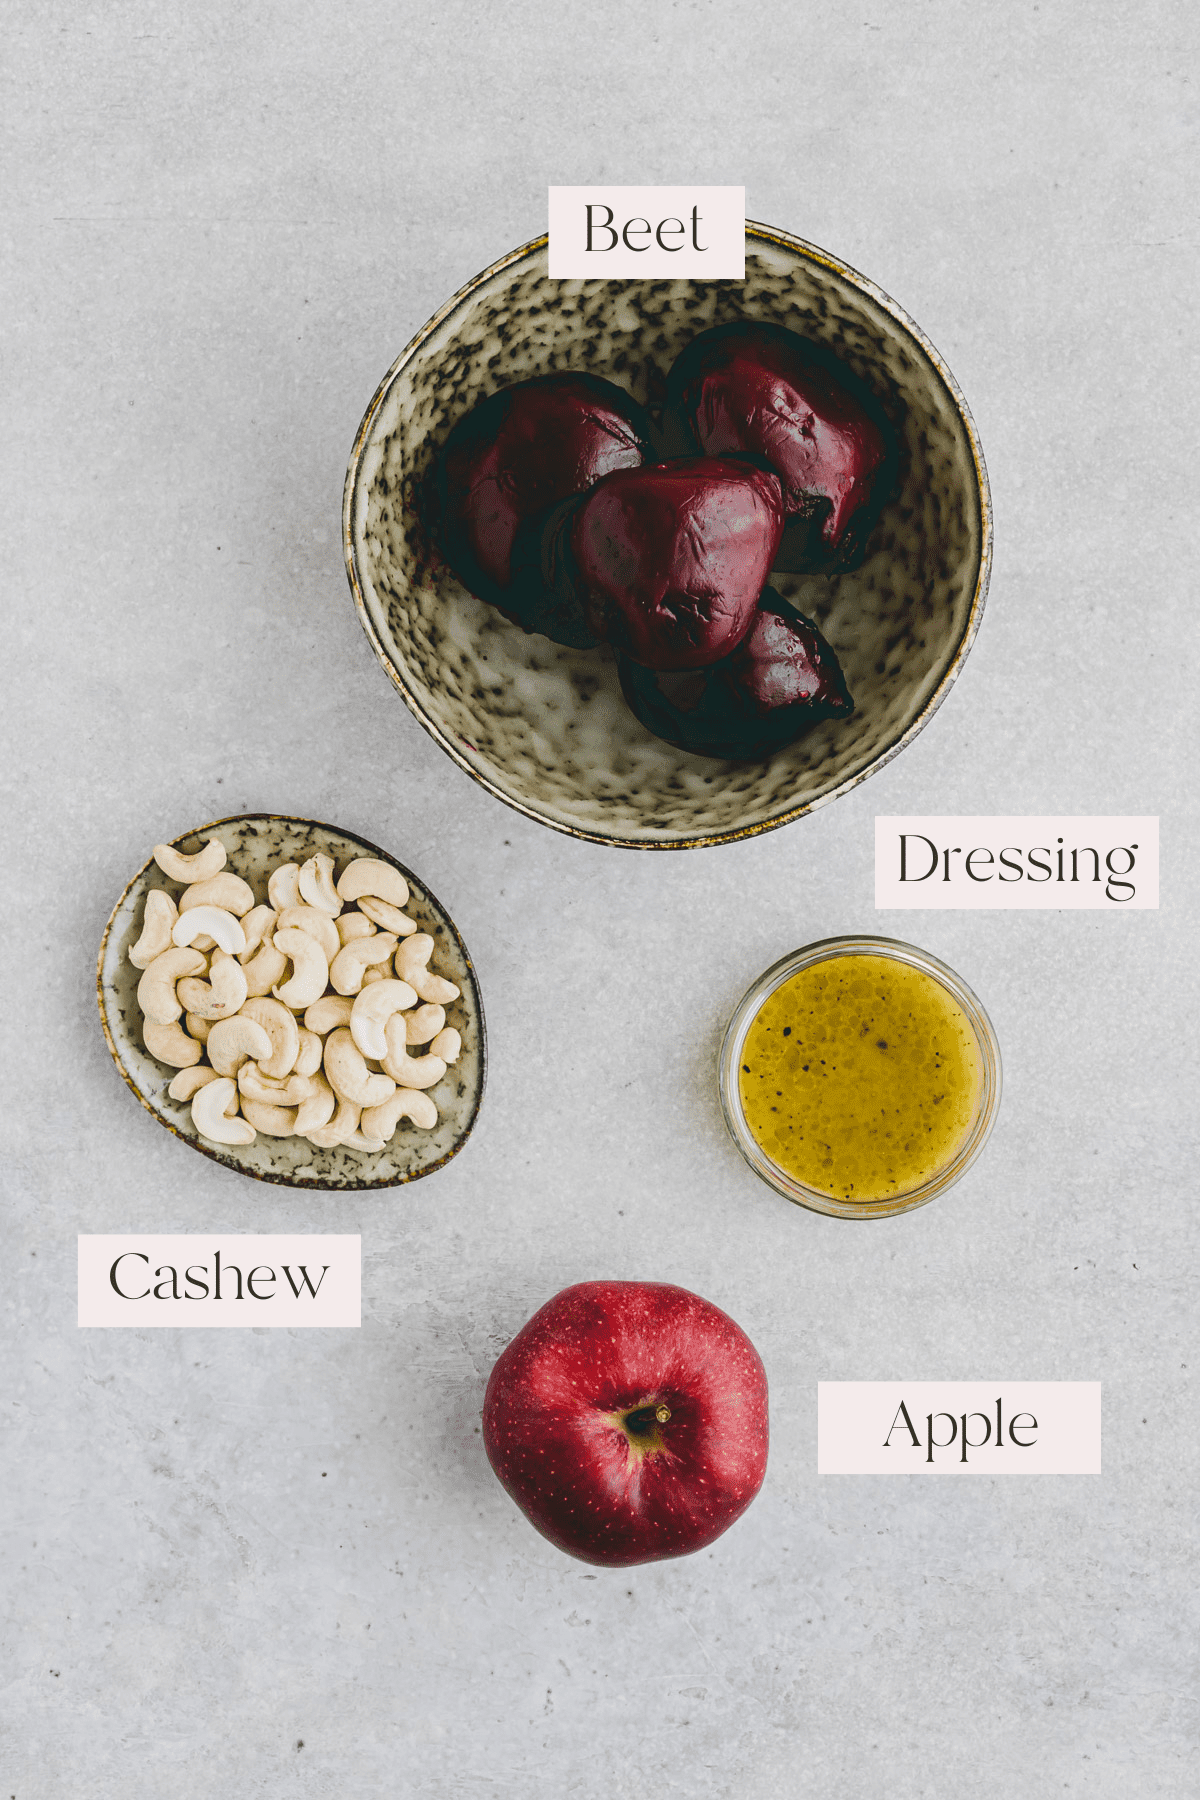 Beet and Apple Salad Ingredients